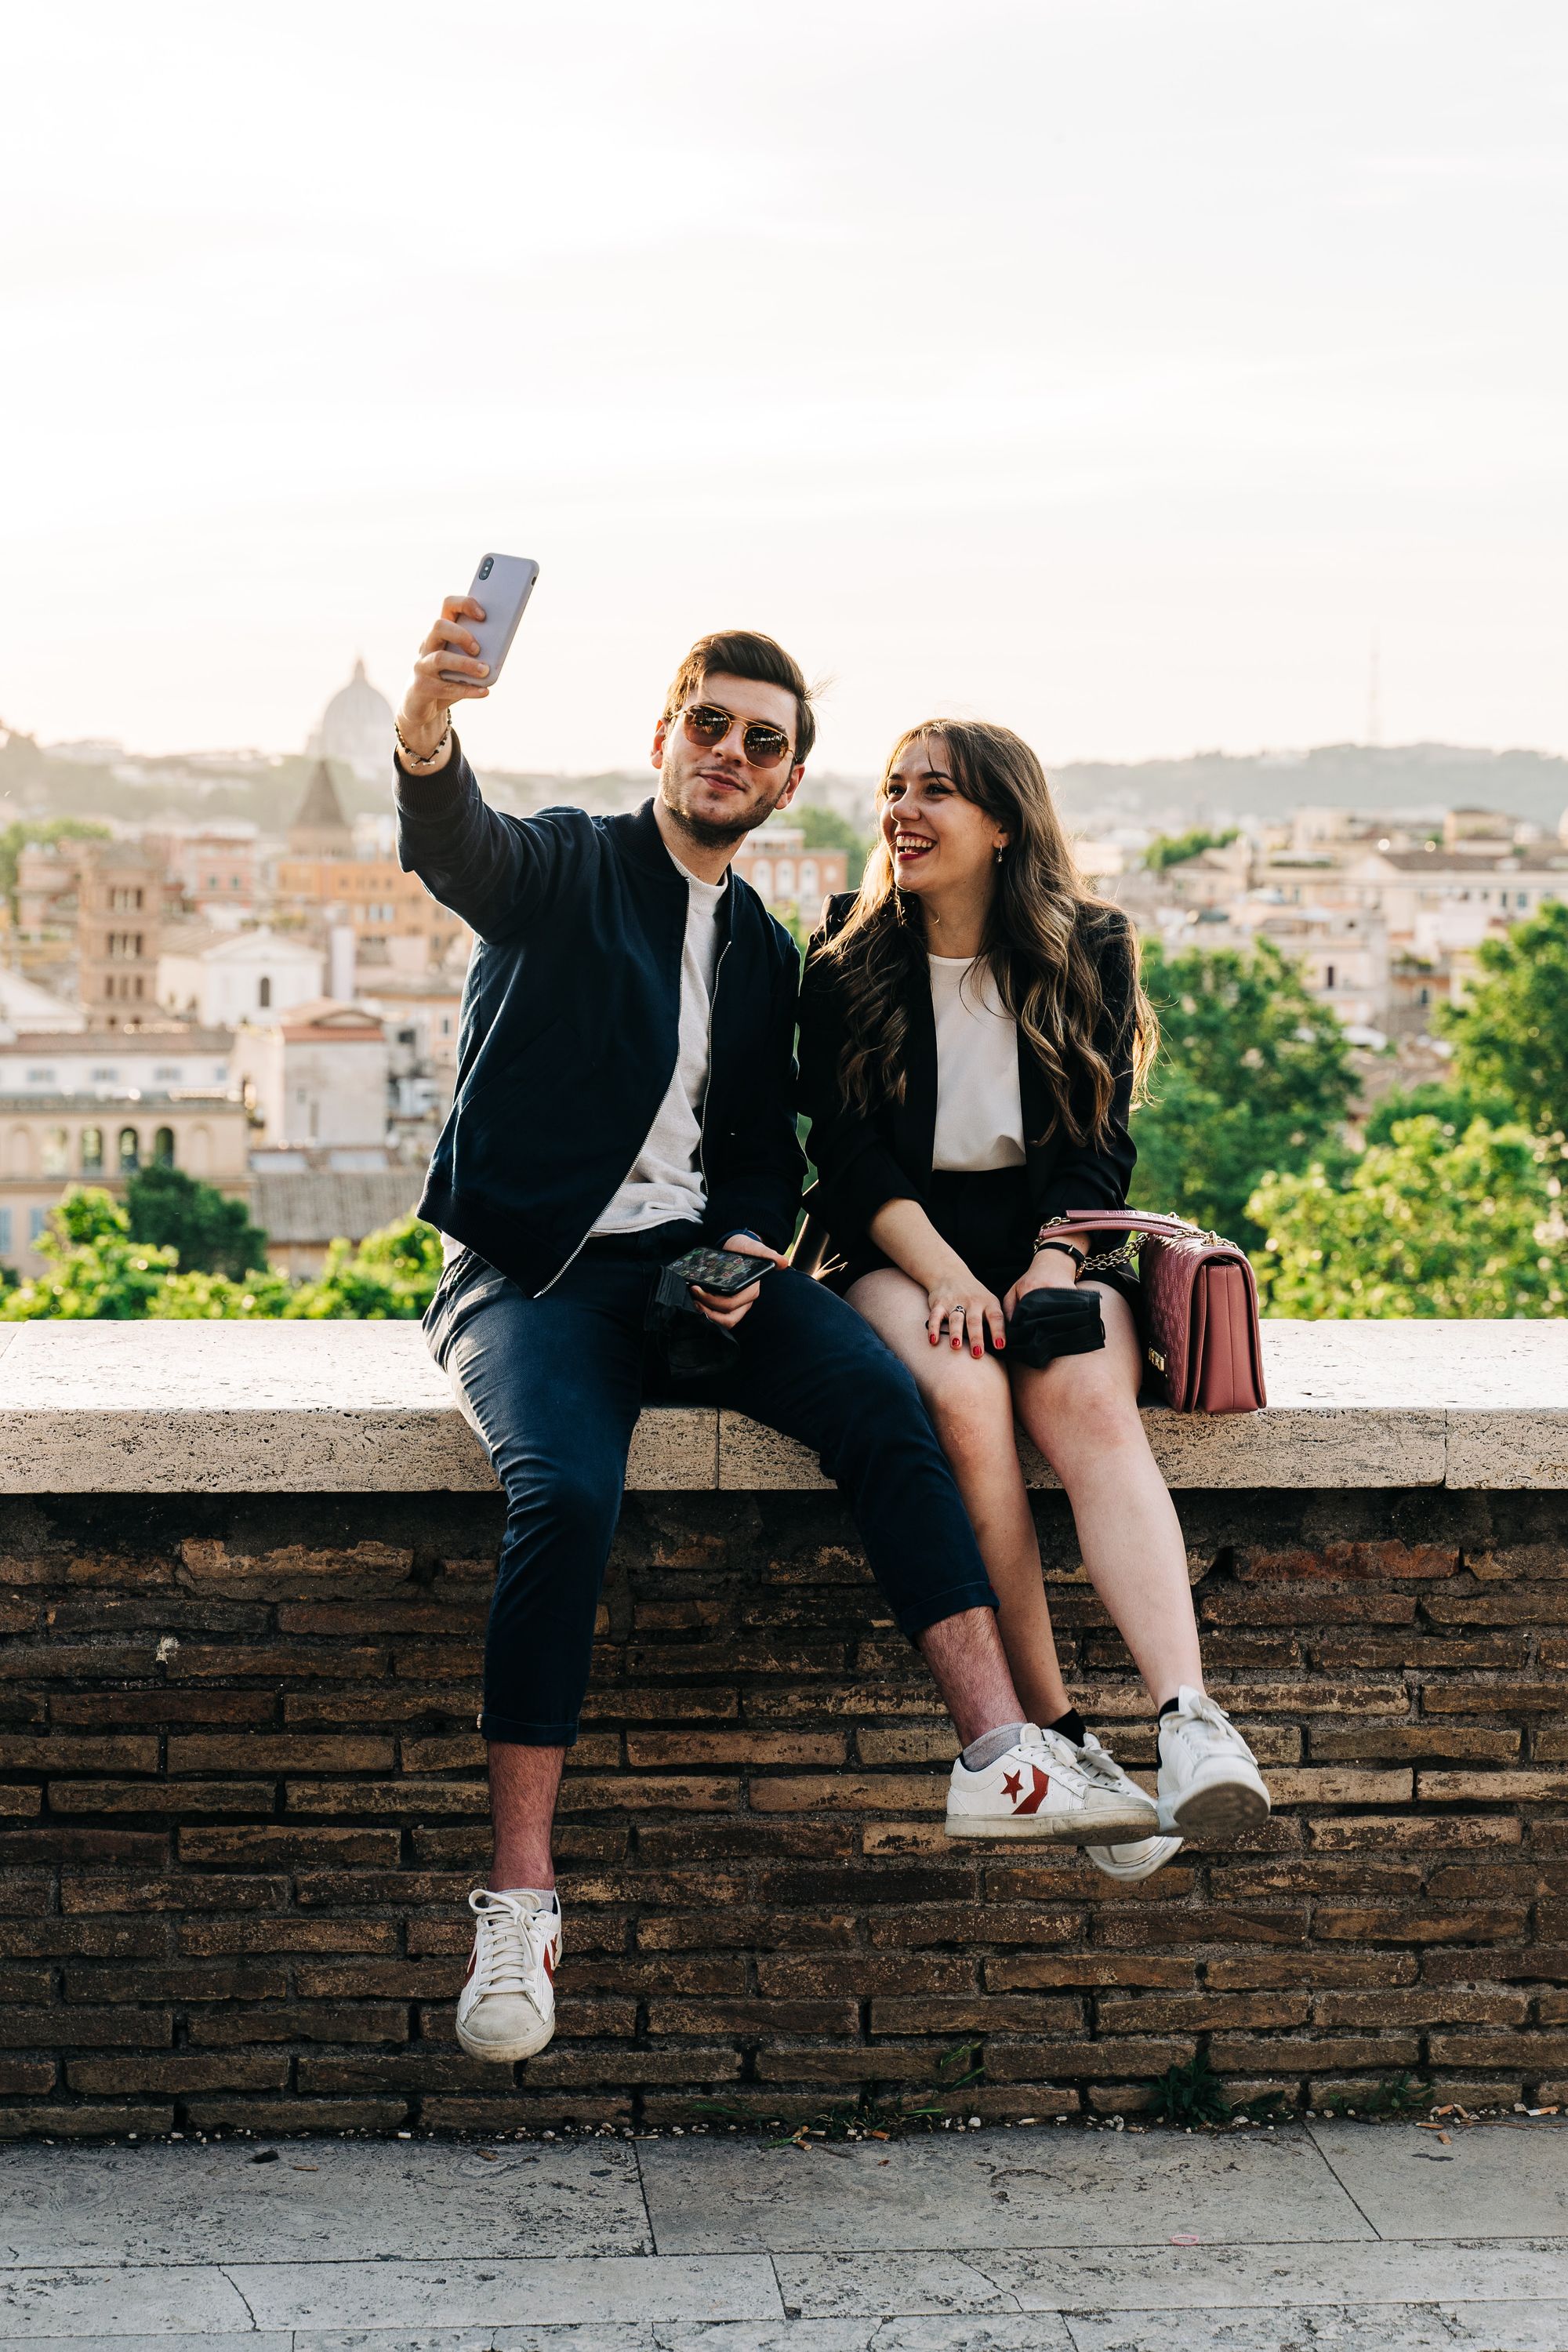 siedząca na murku para robi sobie selfie